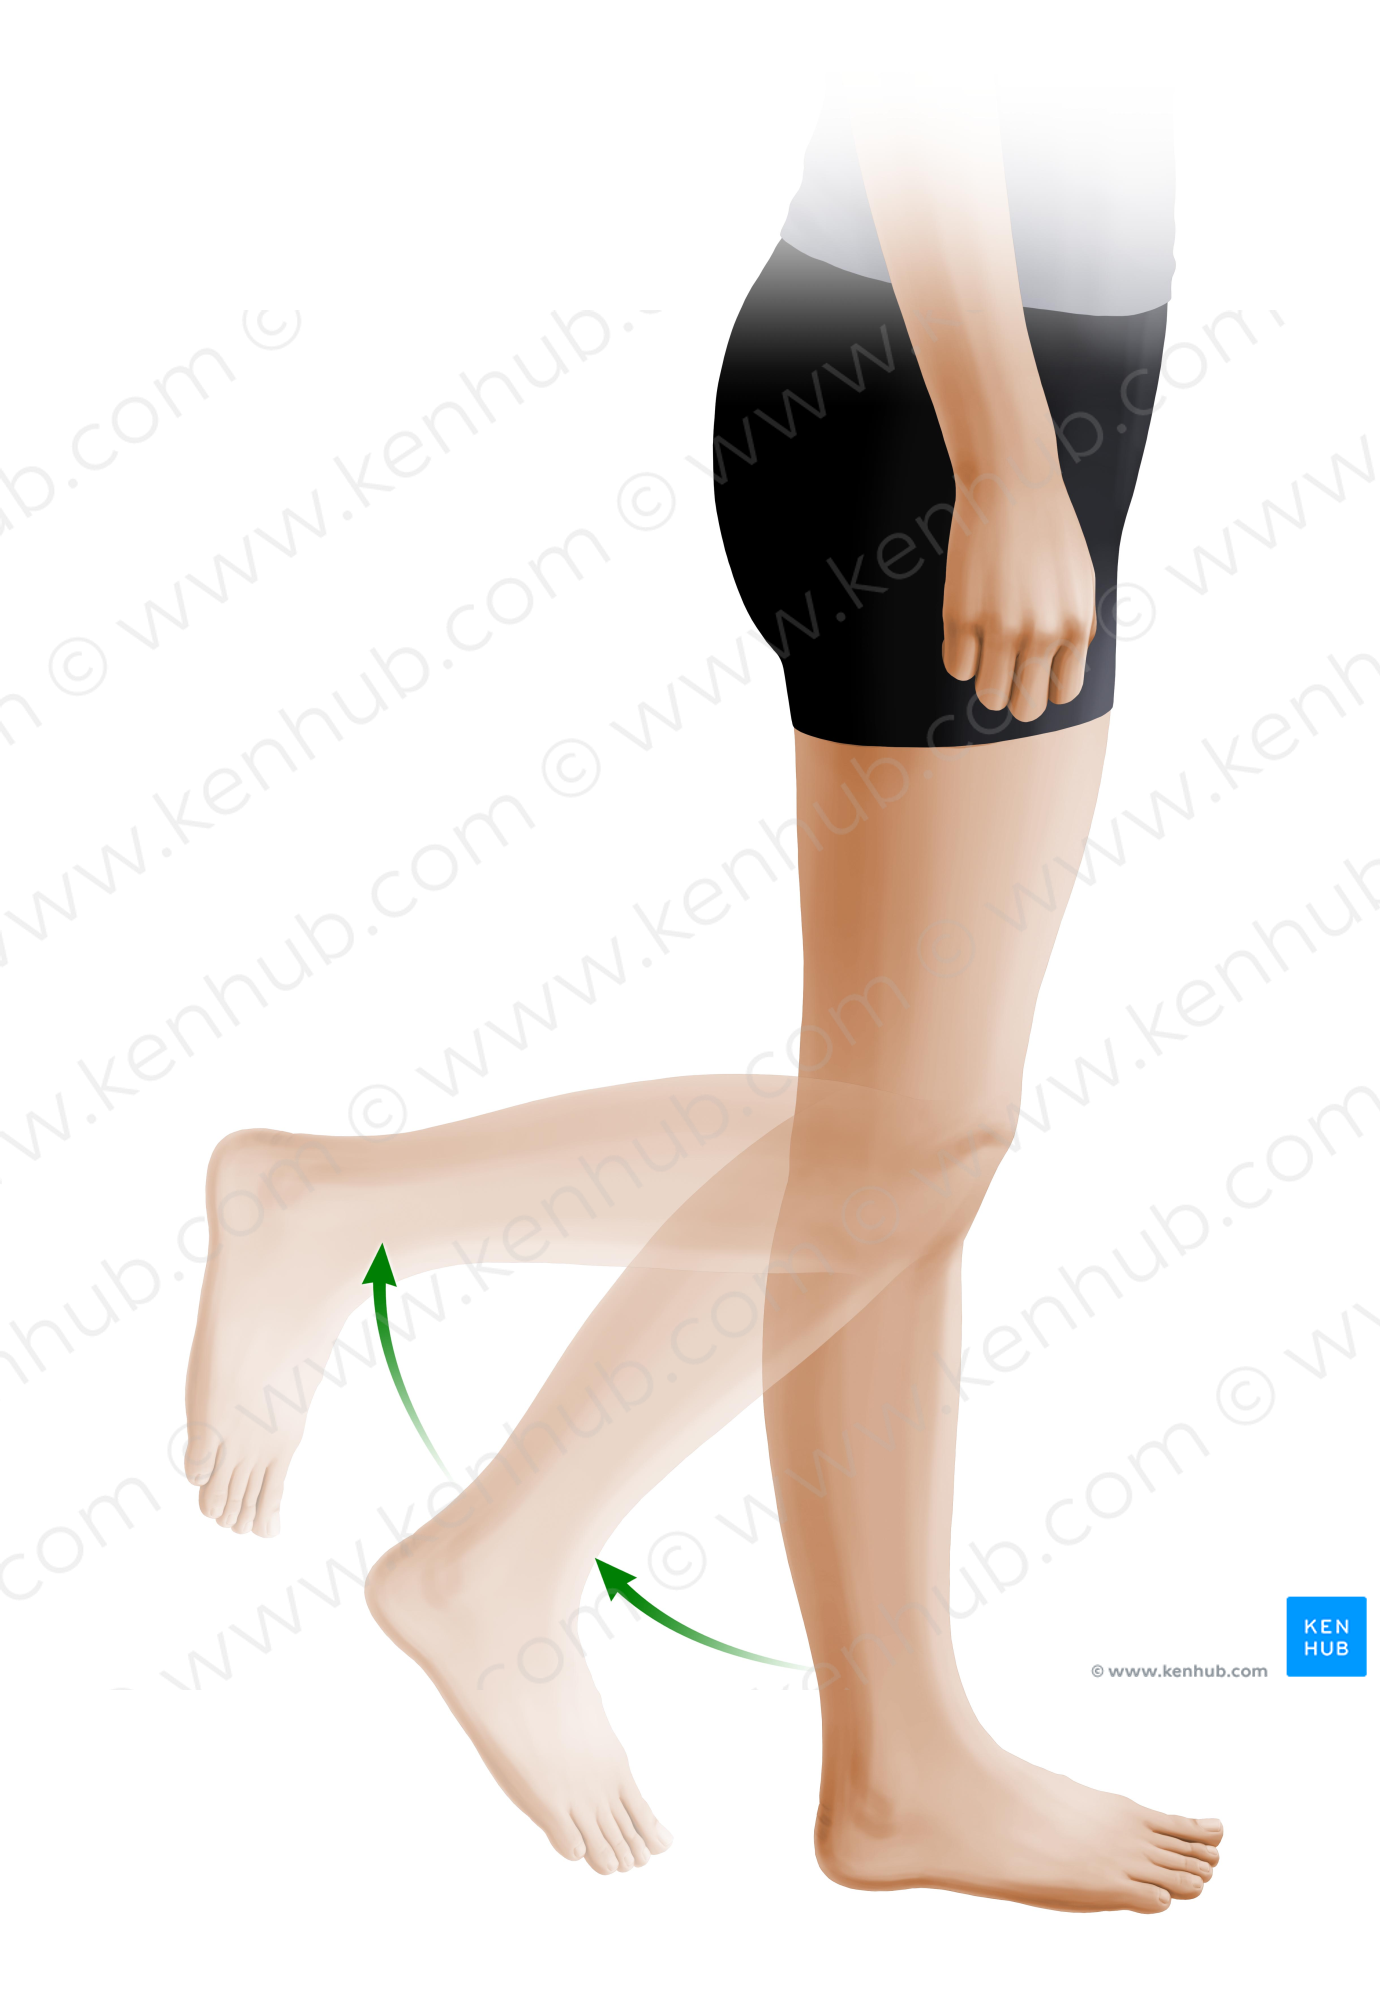 Flexion of leg (#11018)